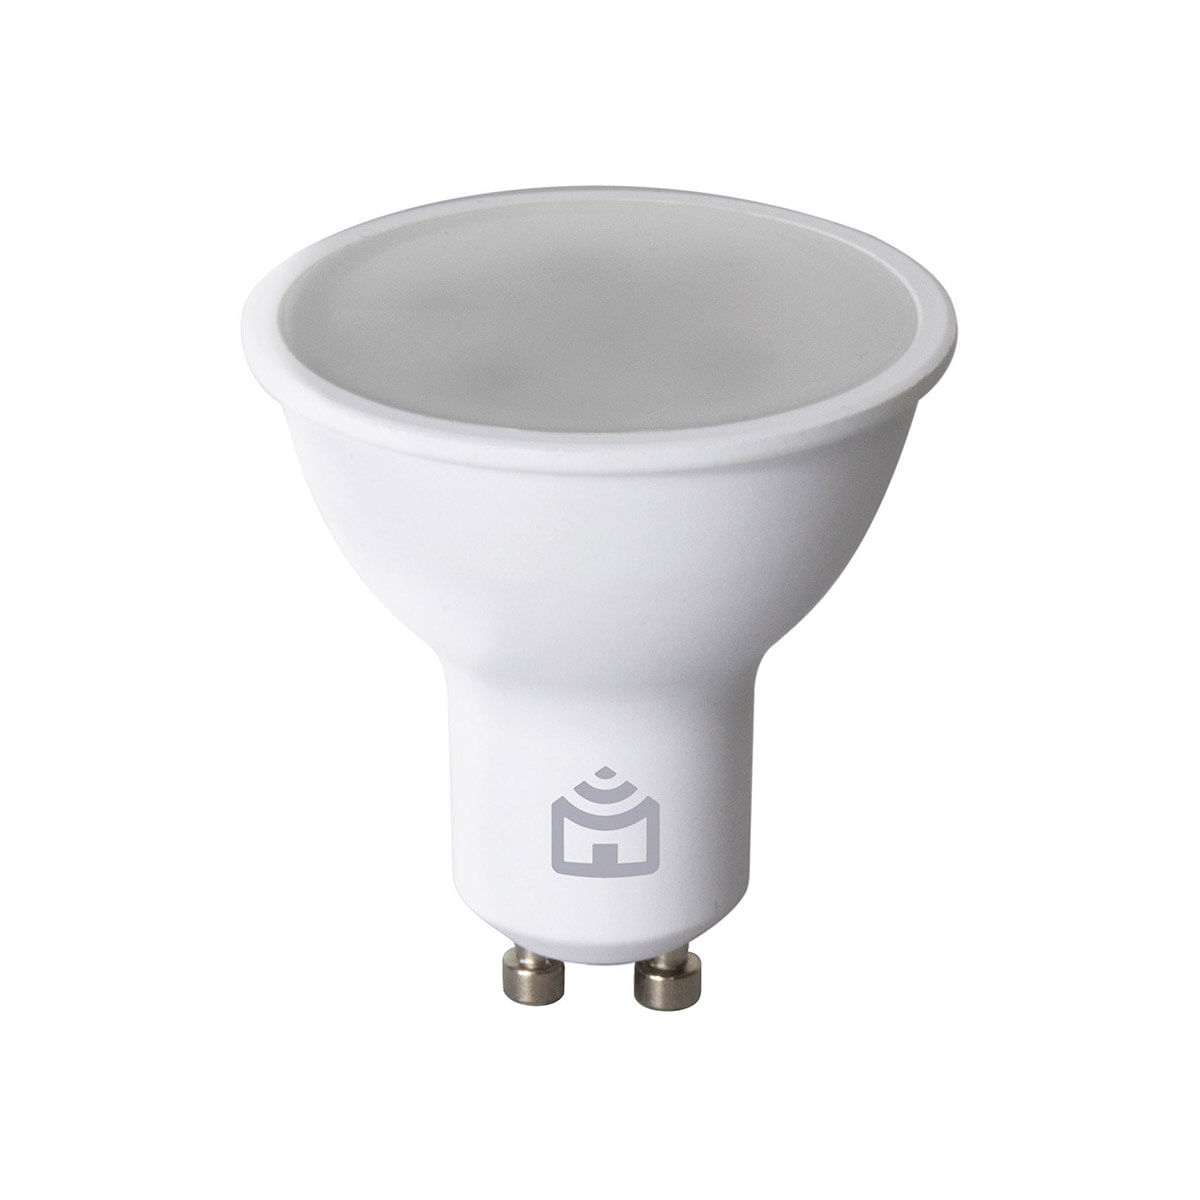 6151647_Smart-Lampada-Spot-Wi-Fi-Positivo-Casa-Inteligente_1_Zoom